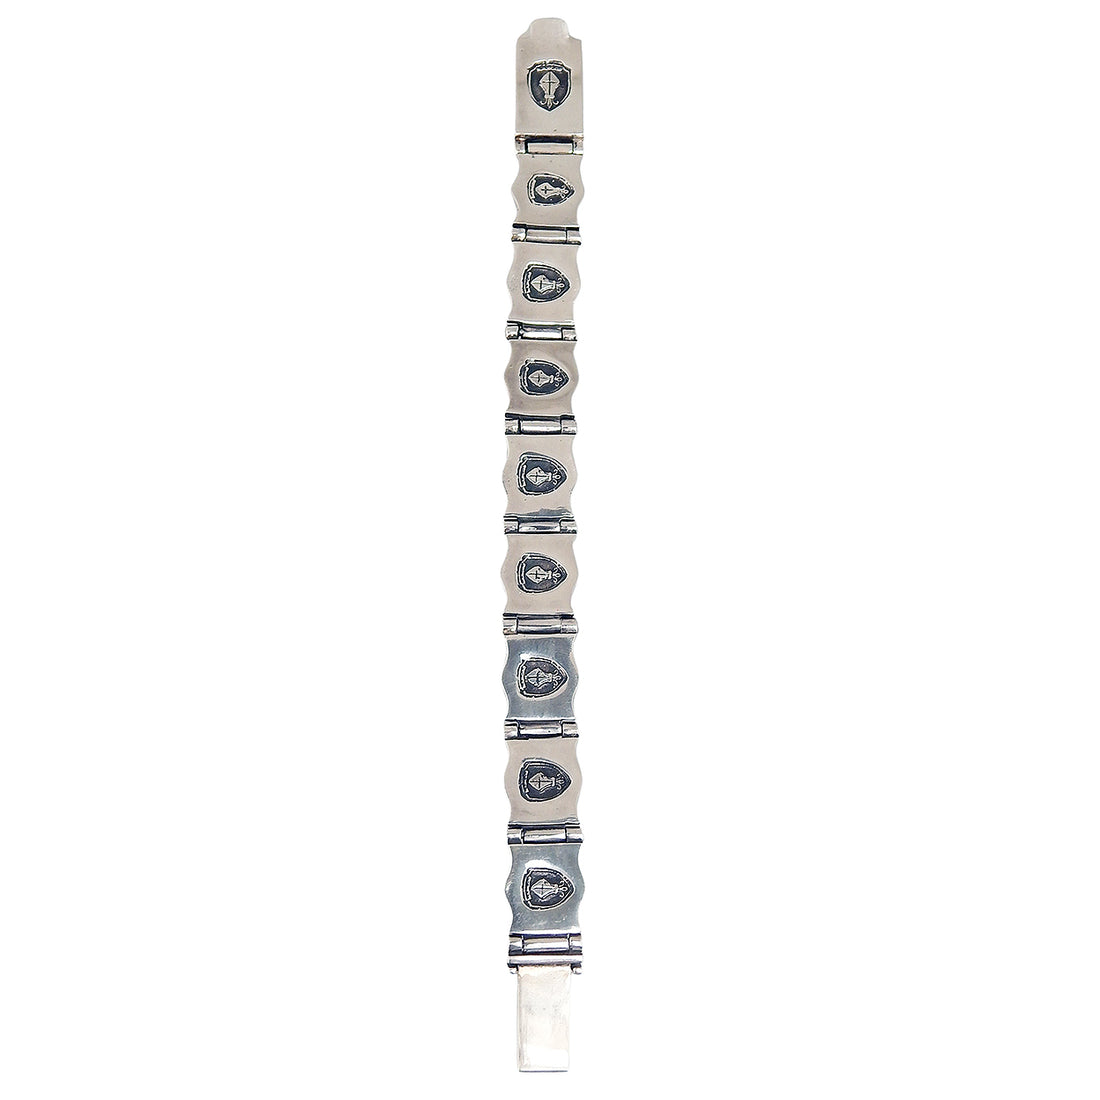 MARCOS - "SKULL" Limited Edition Bracelet in Sterling Silver